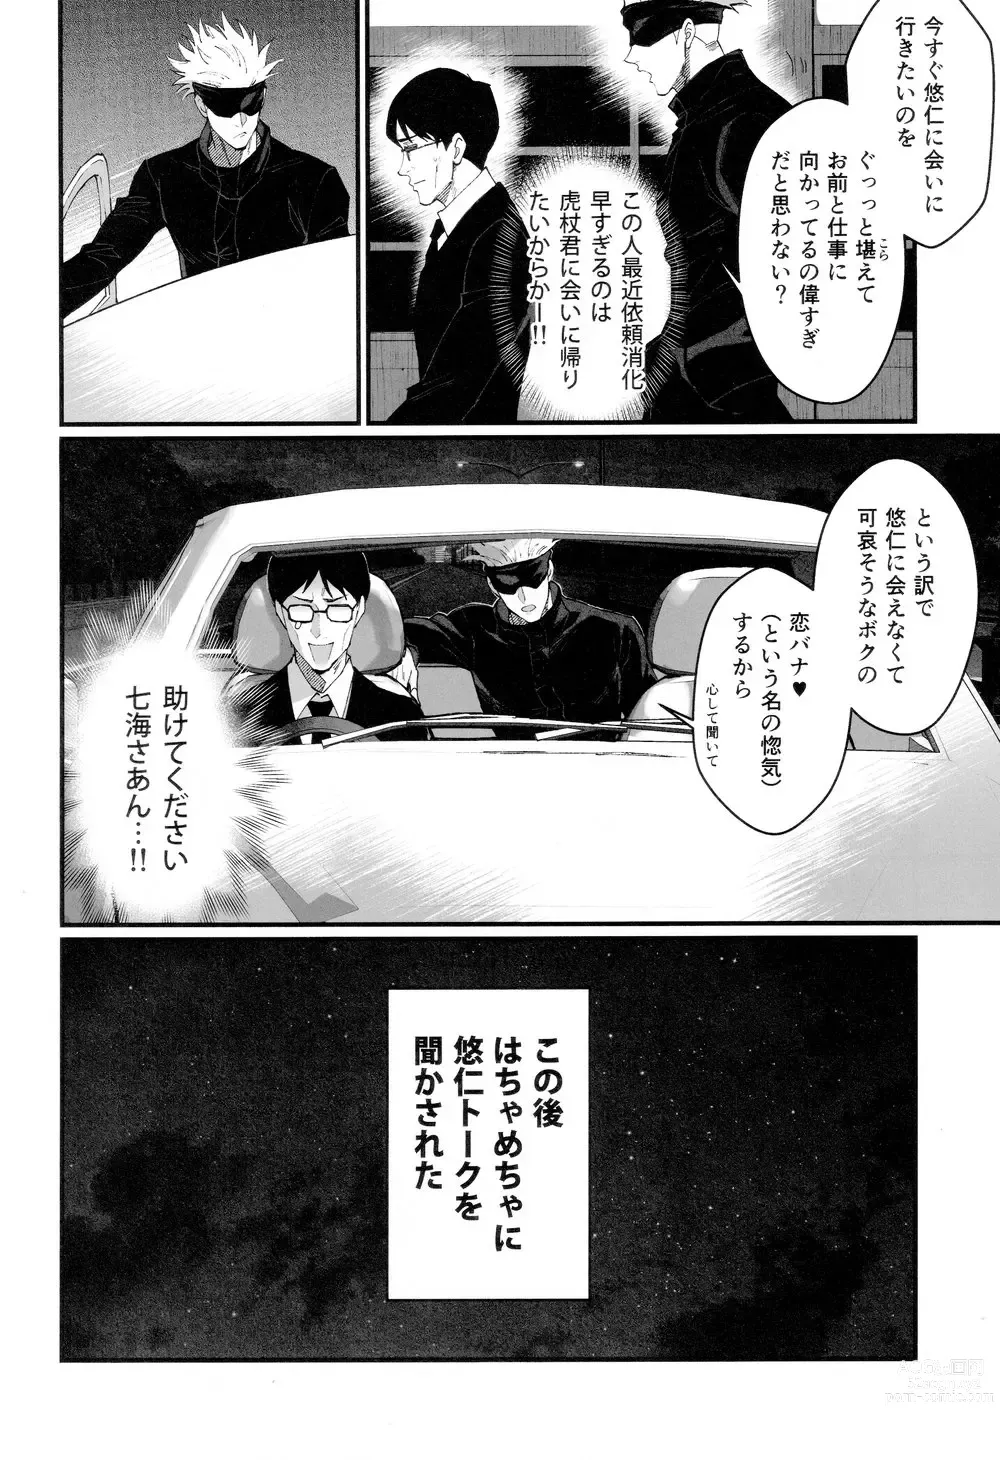 Page 8 of doujinshi Gachikoi Monster